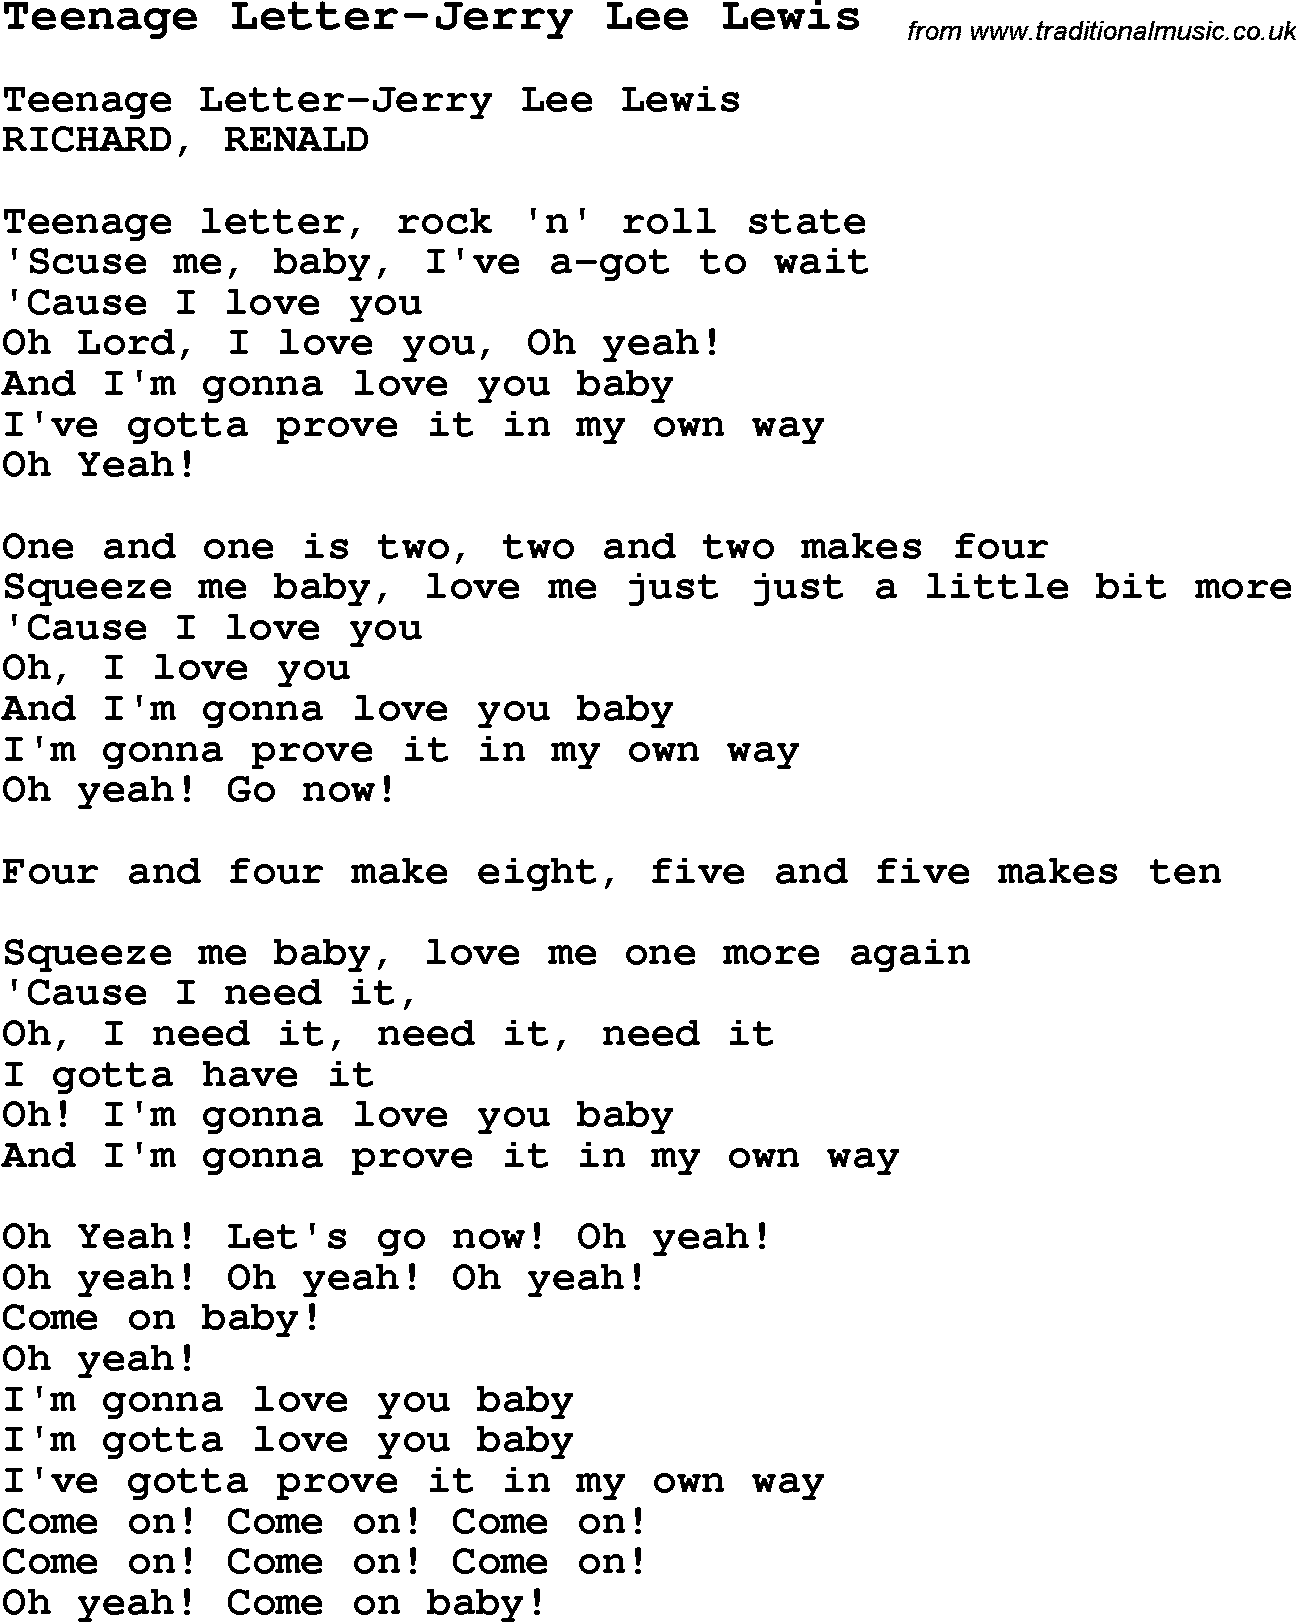 Skiffle Song Lyrics for Teenage Letter-Jerry Lee Lewis.